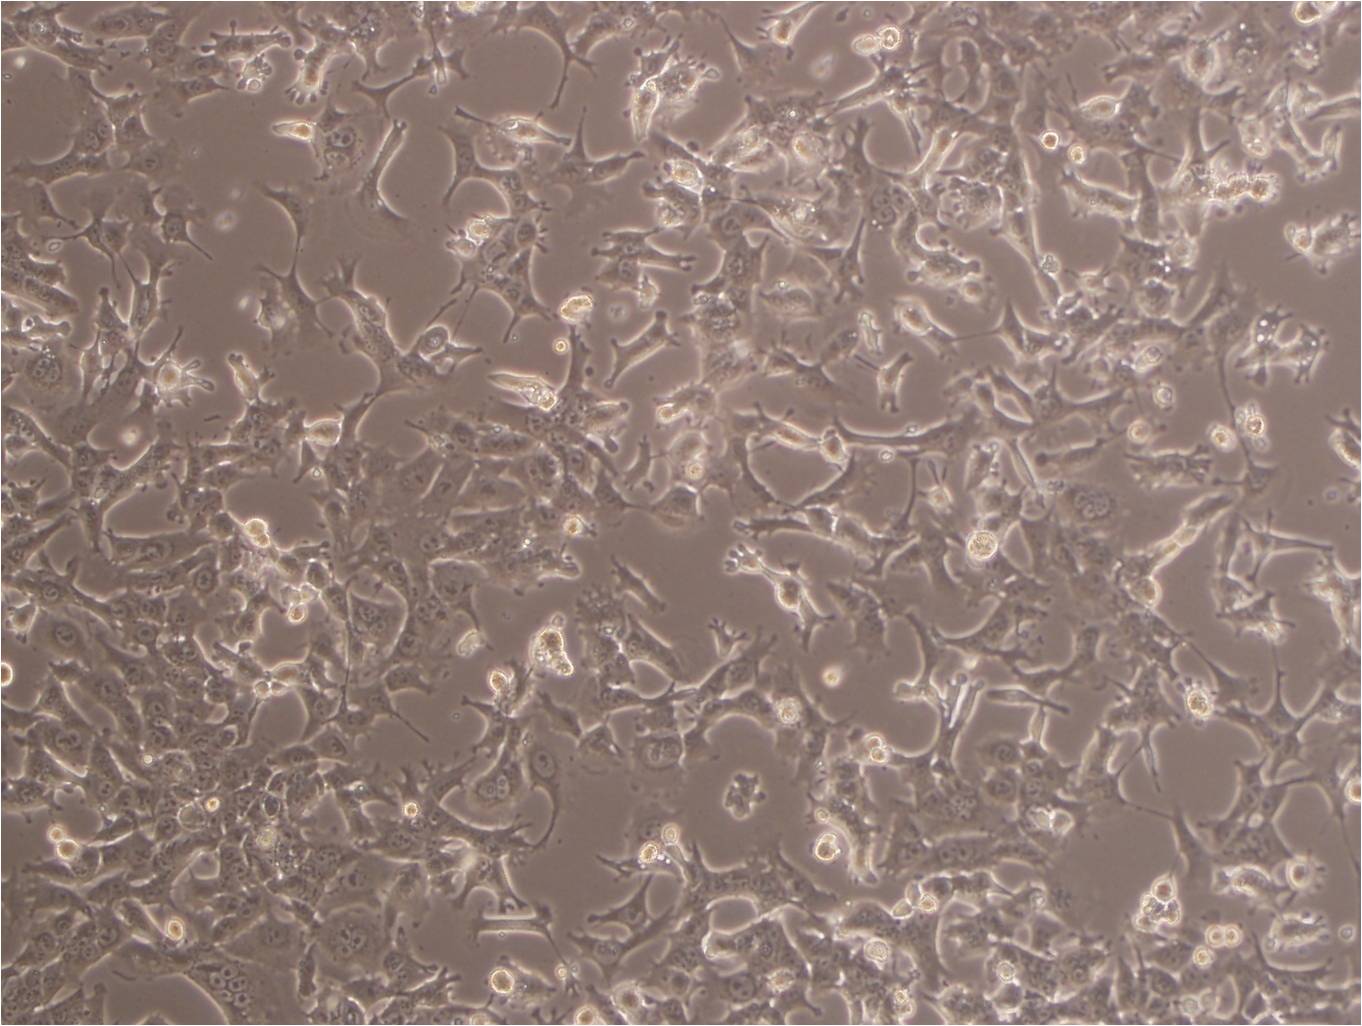 ACHN epithelioid cells人肾细胞腺癌细胞系,ACHN epithelioid cells